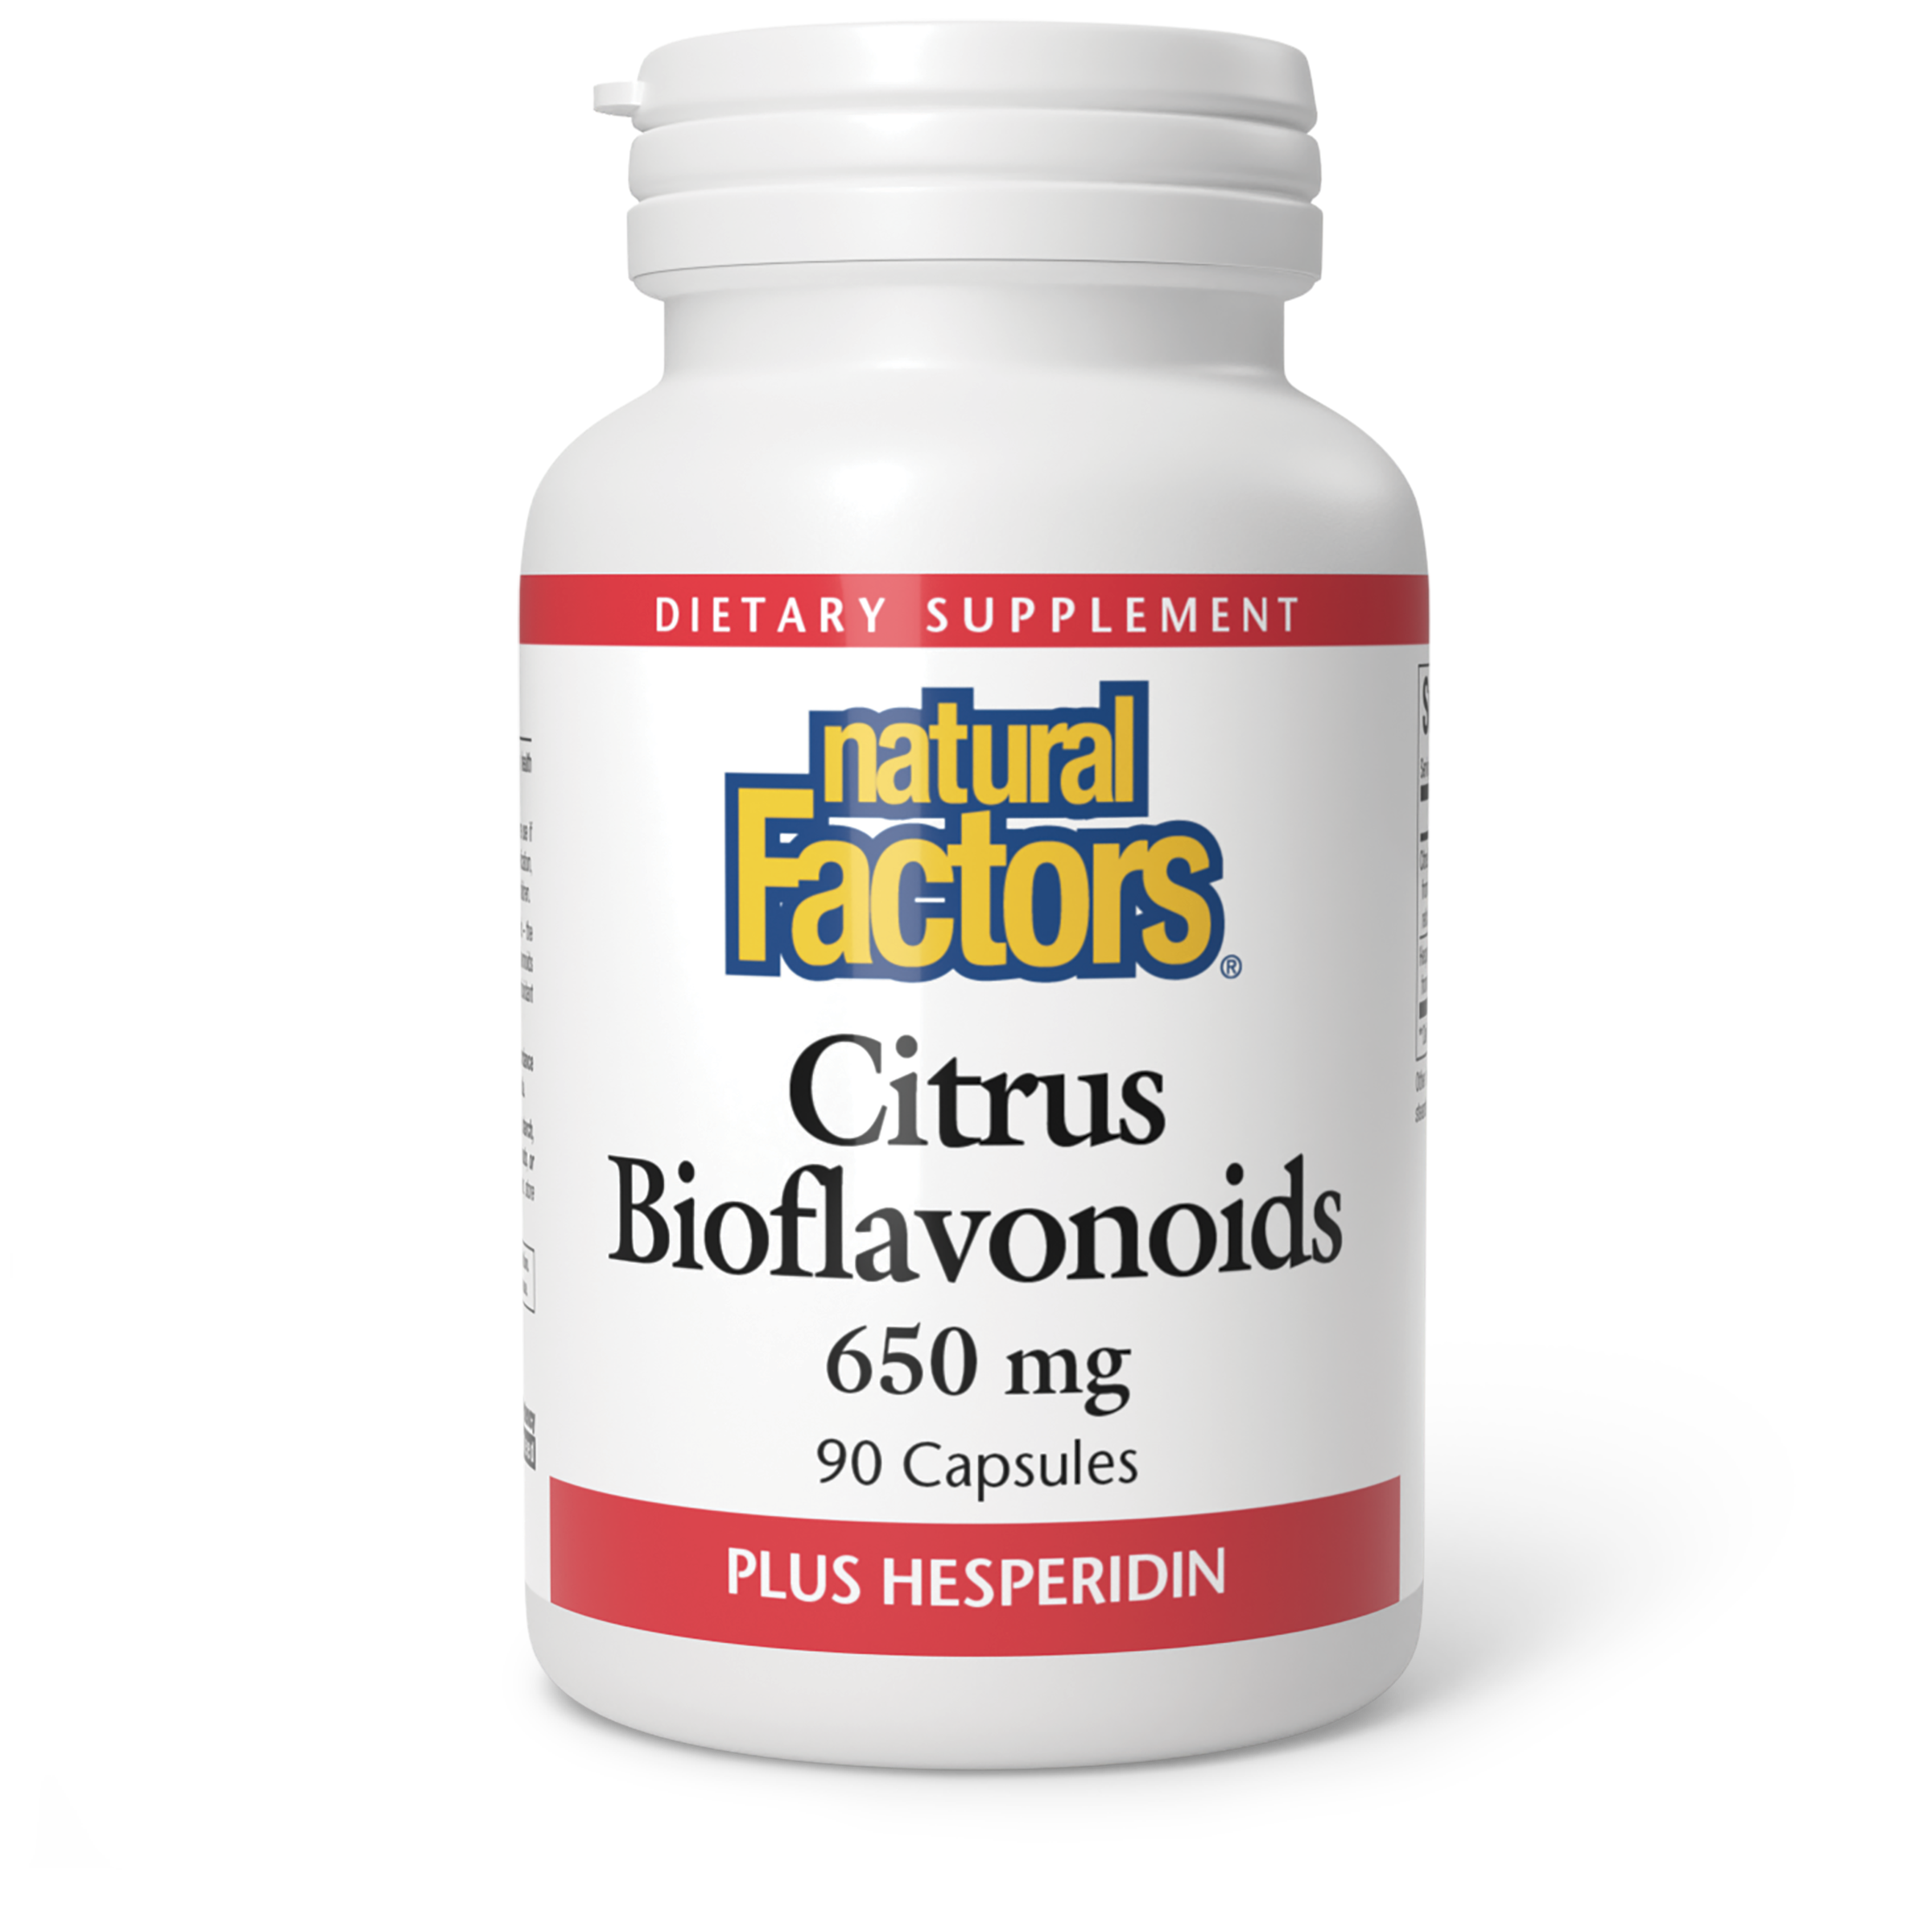 Citrus bioflavonoids supplements